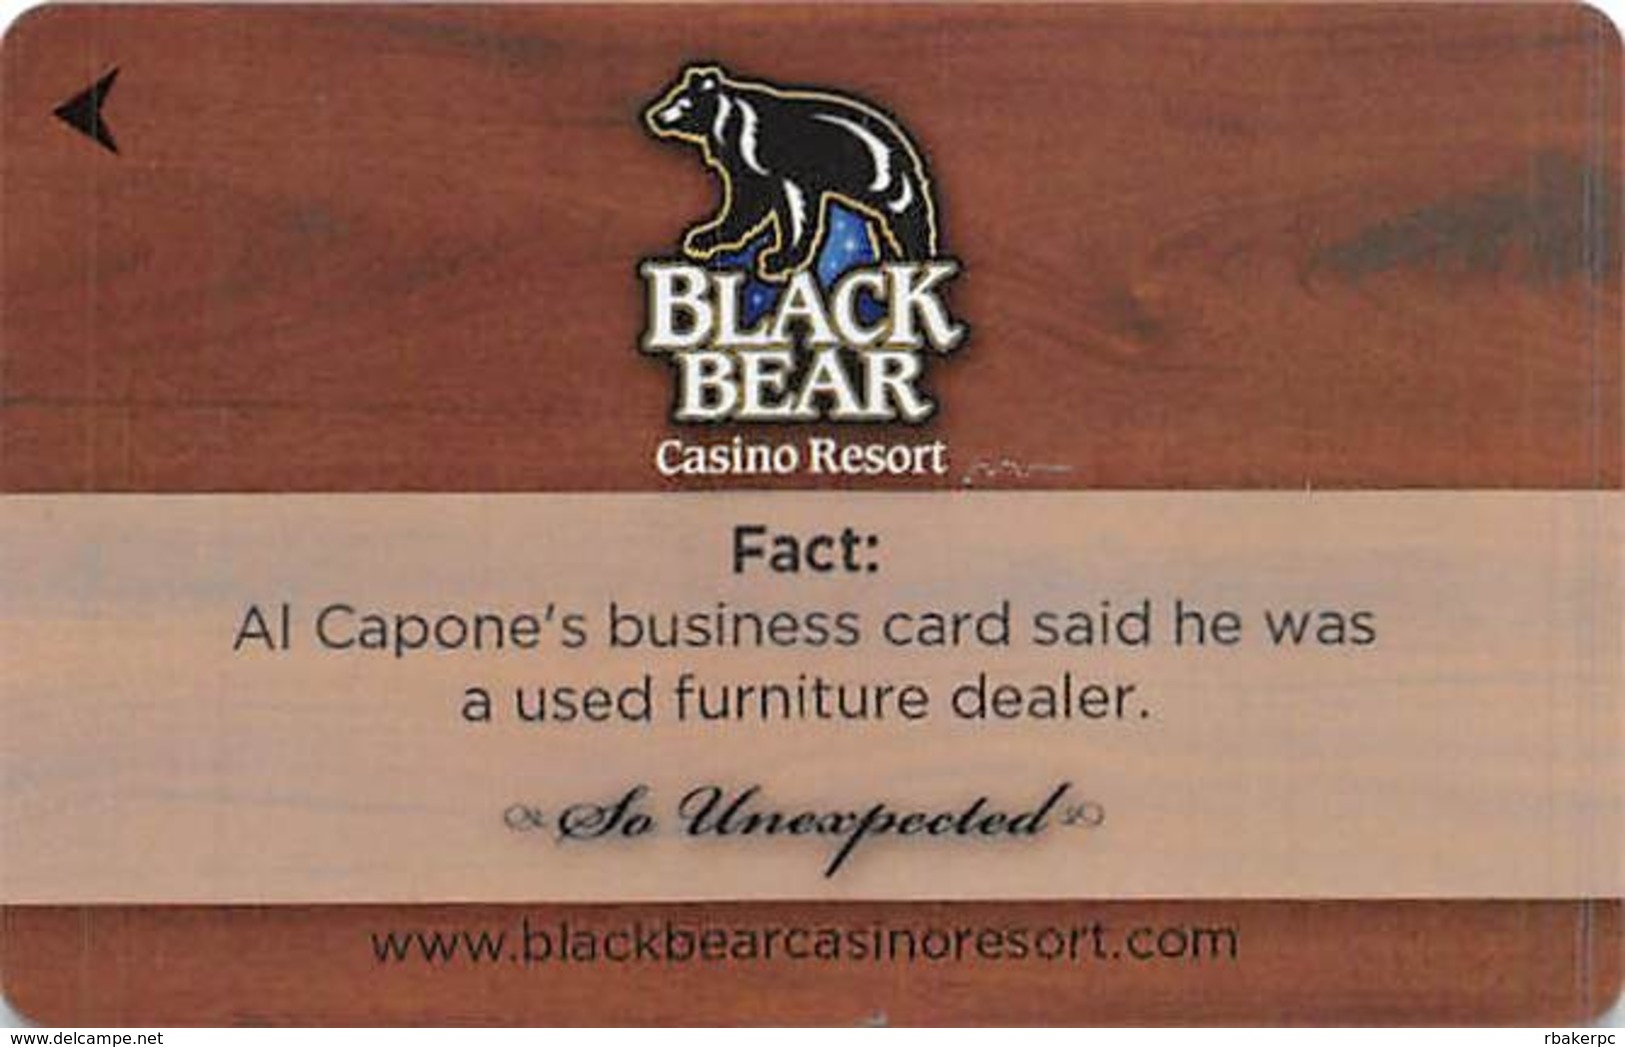 Black Bear Casino - Carlton, MN - Hotel Room Key - Hotel Keycards